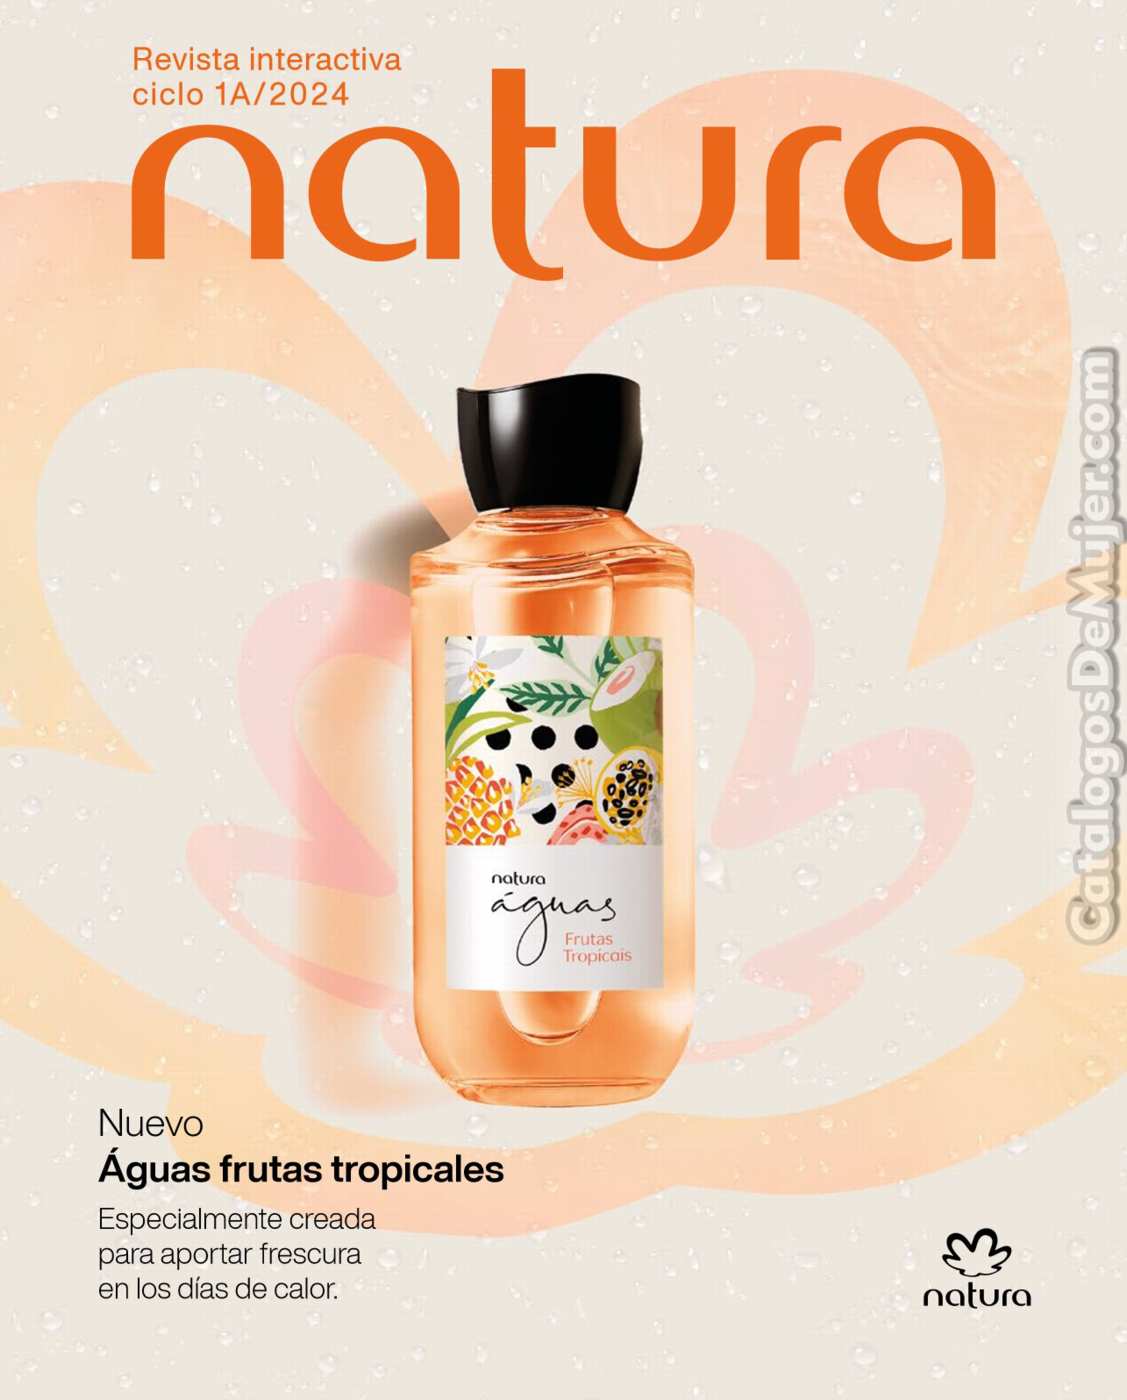 Catalogo Natura Ciclo 1 Colombia 2024